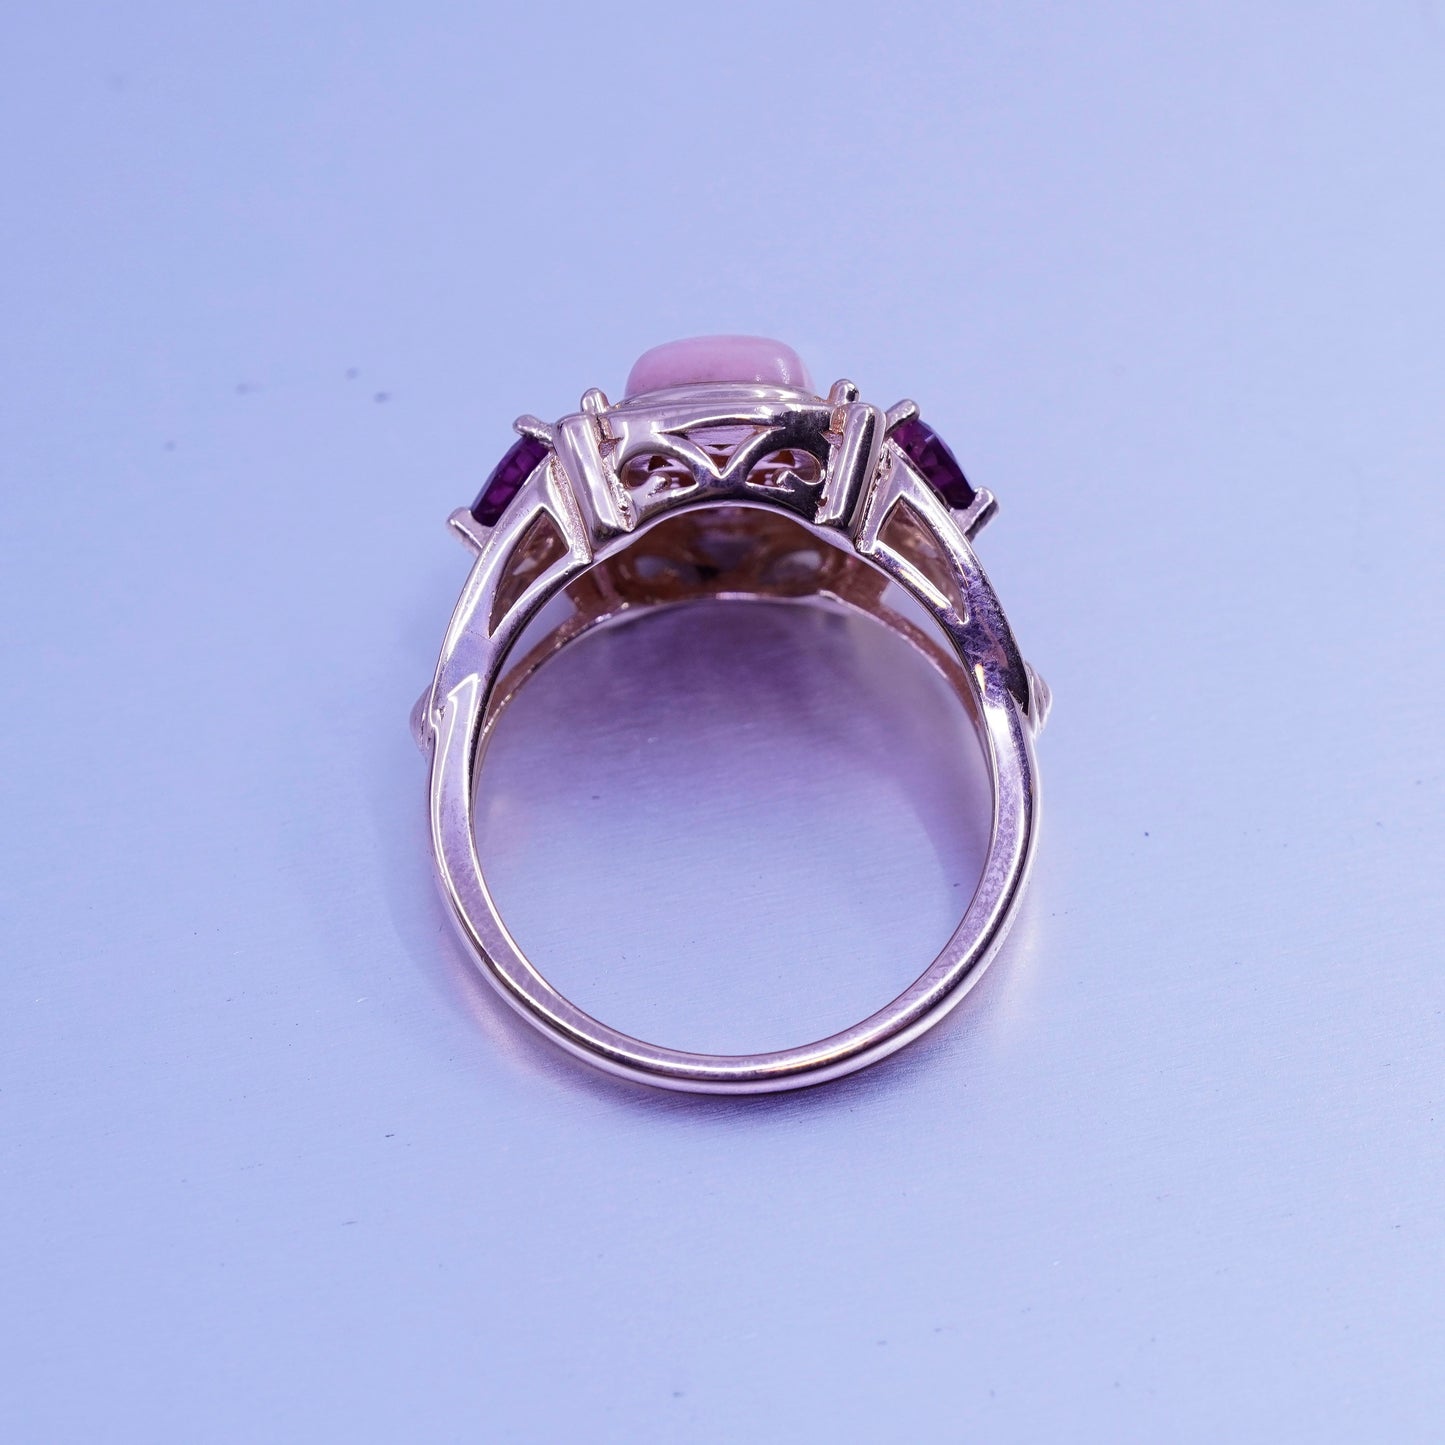 Size 10, DBJ vermeil rose gold over Sterling 925 silver band ring quartz heart